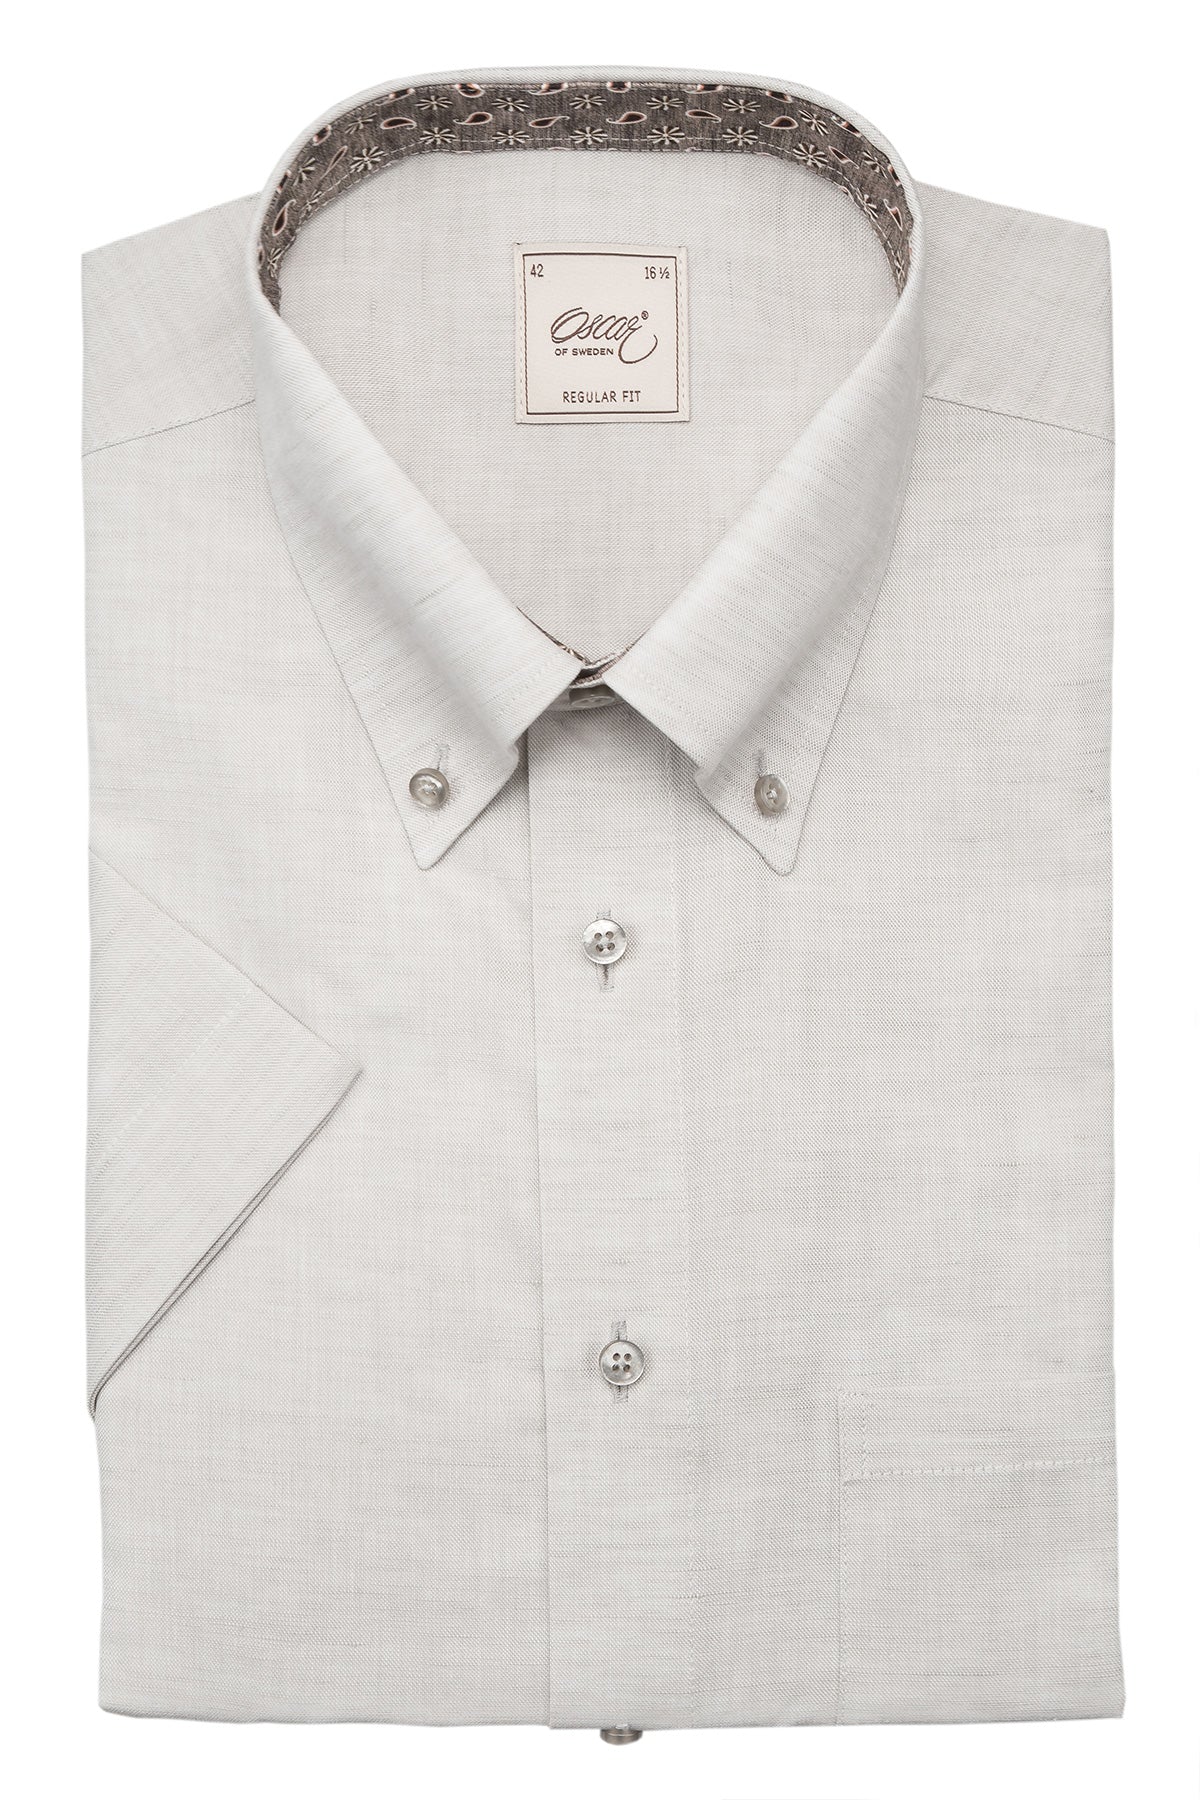 Light grey short sleeve regular fit shirt with contrast details